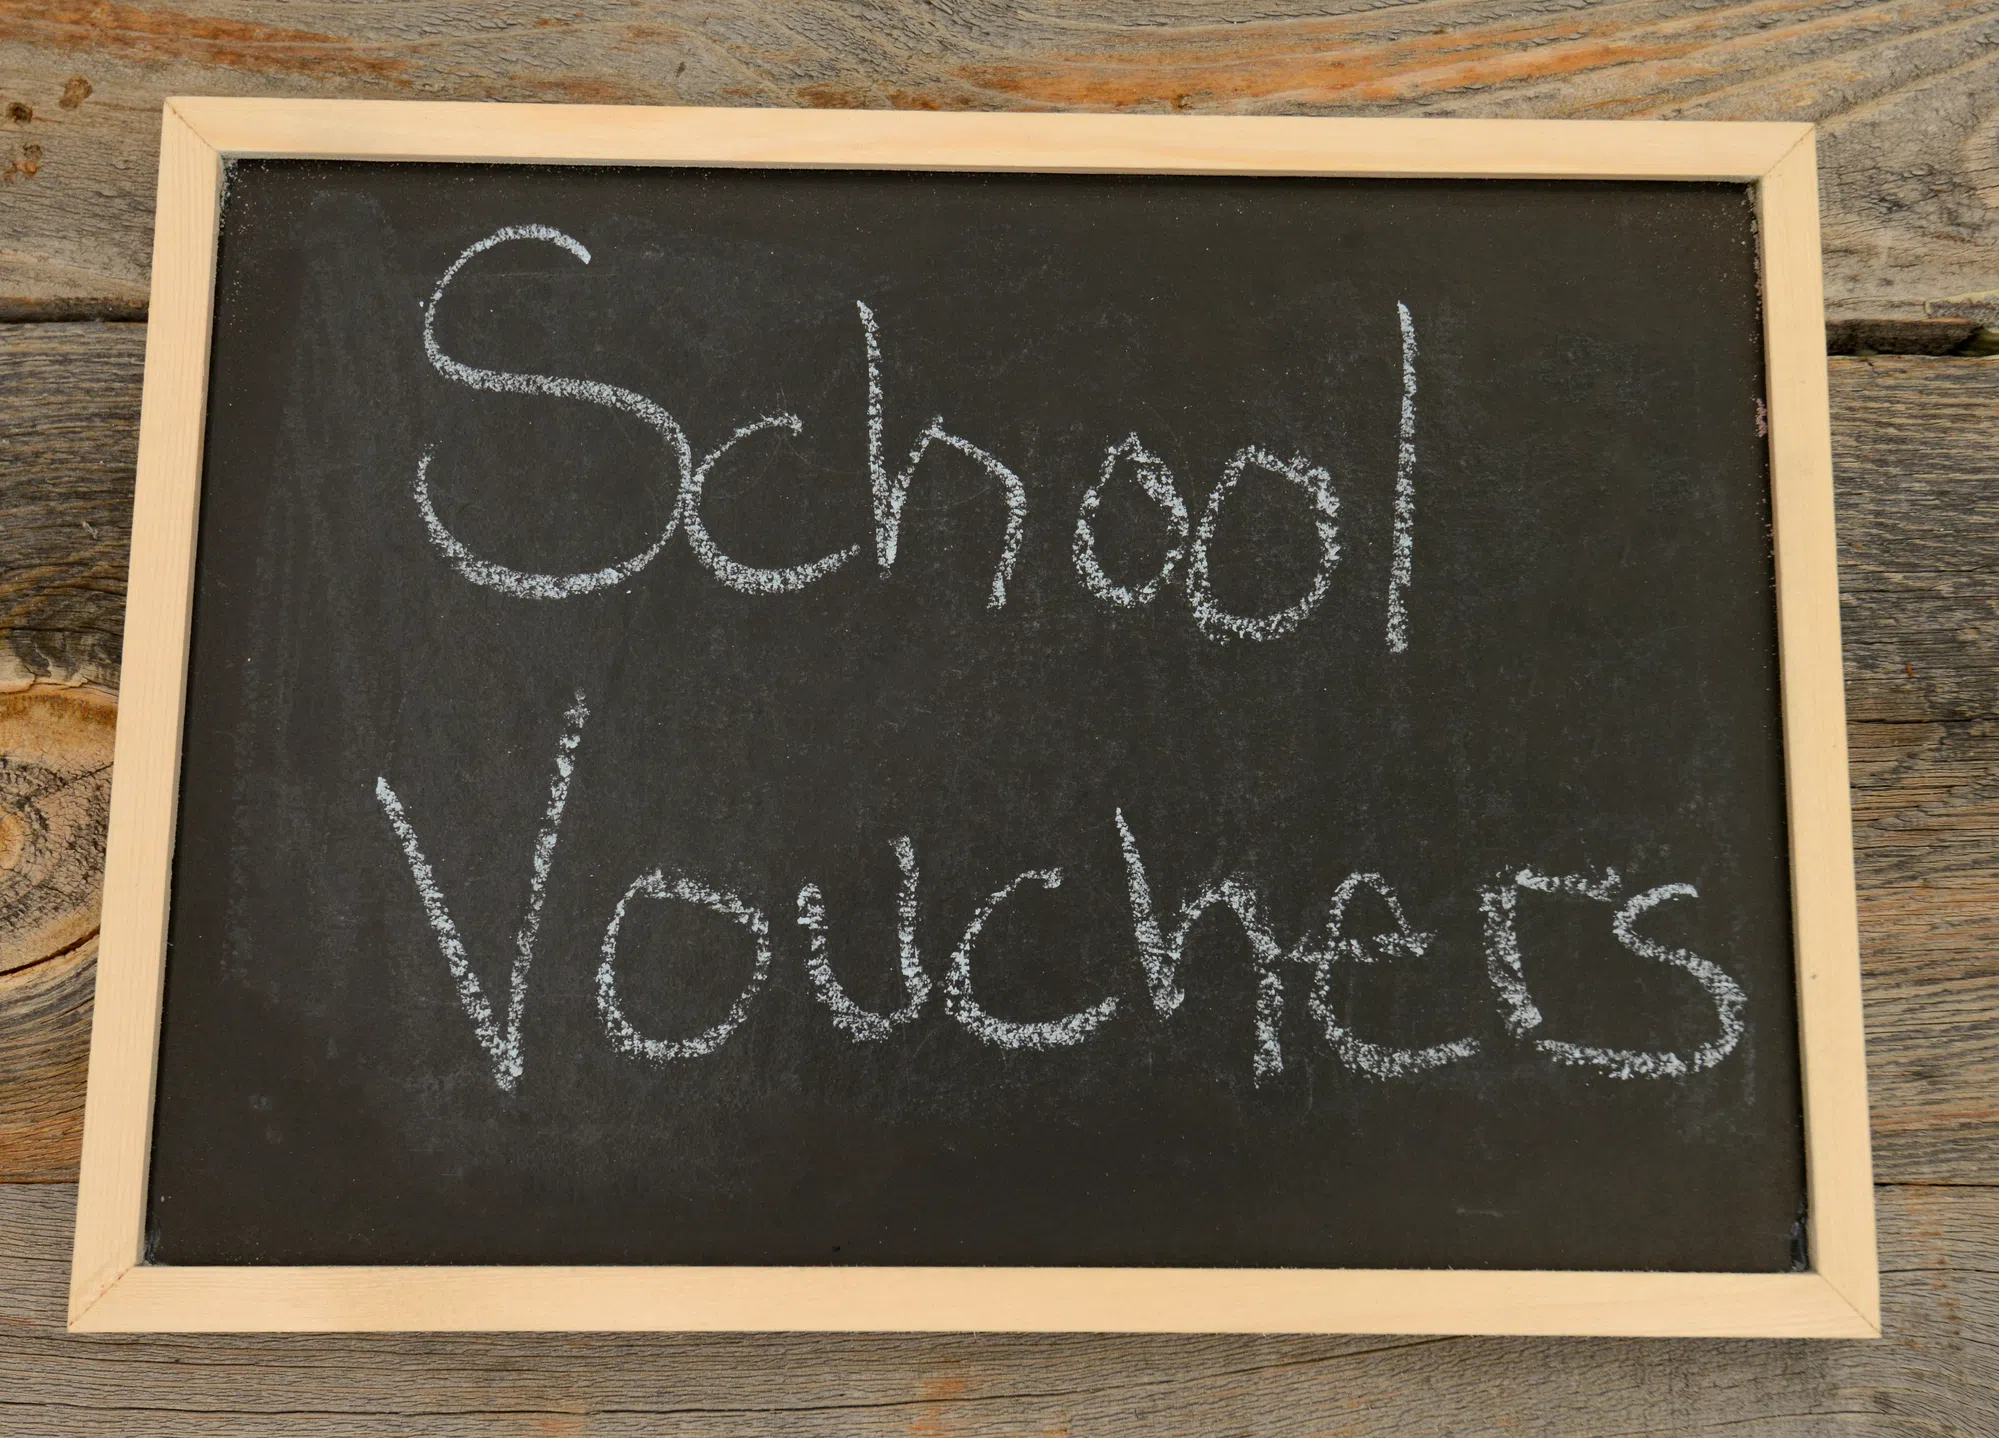 School voucher program bill passes in House after emotional testimony